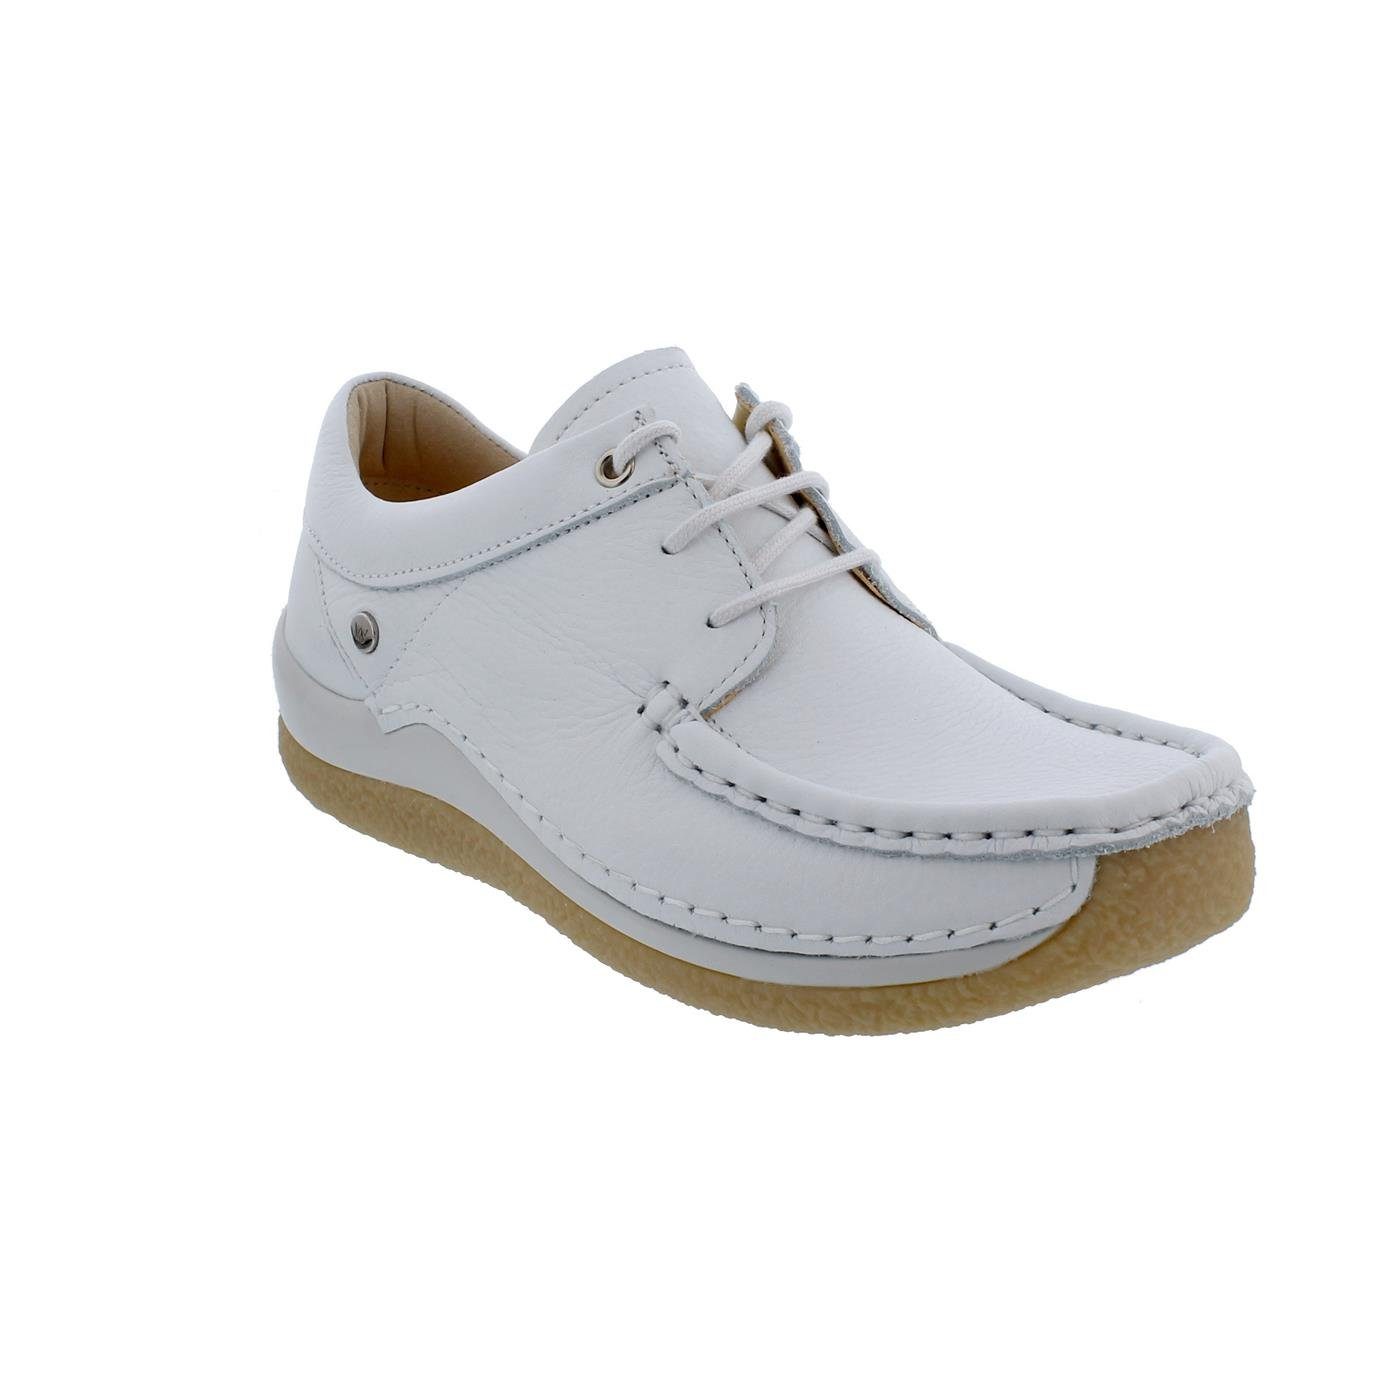 WOLKY Celebration Sneaker, Nappa Schnürschuh 0452520-100 leather, White